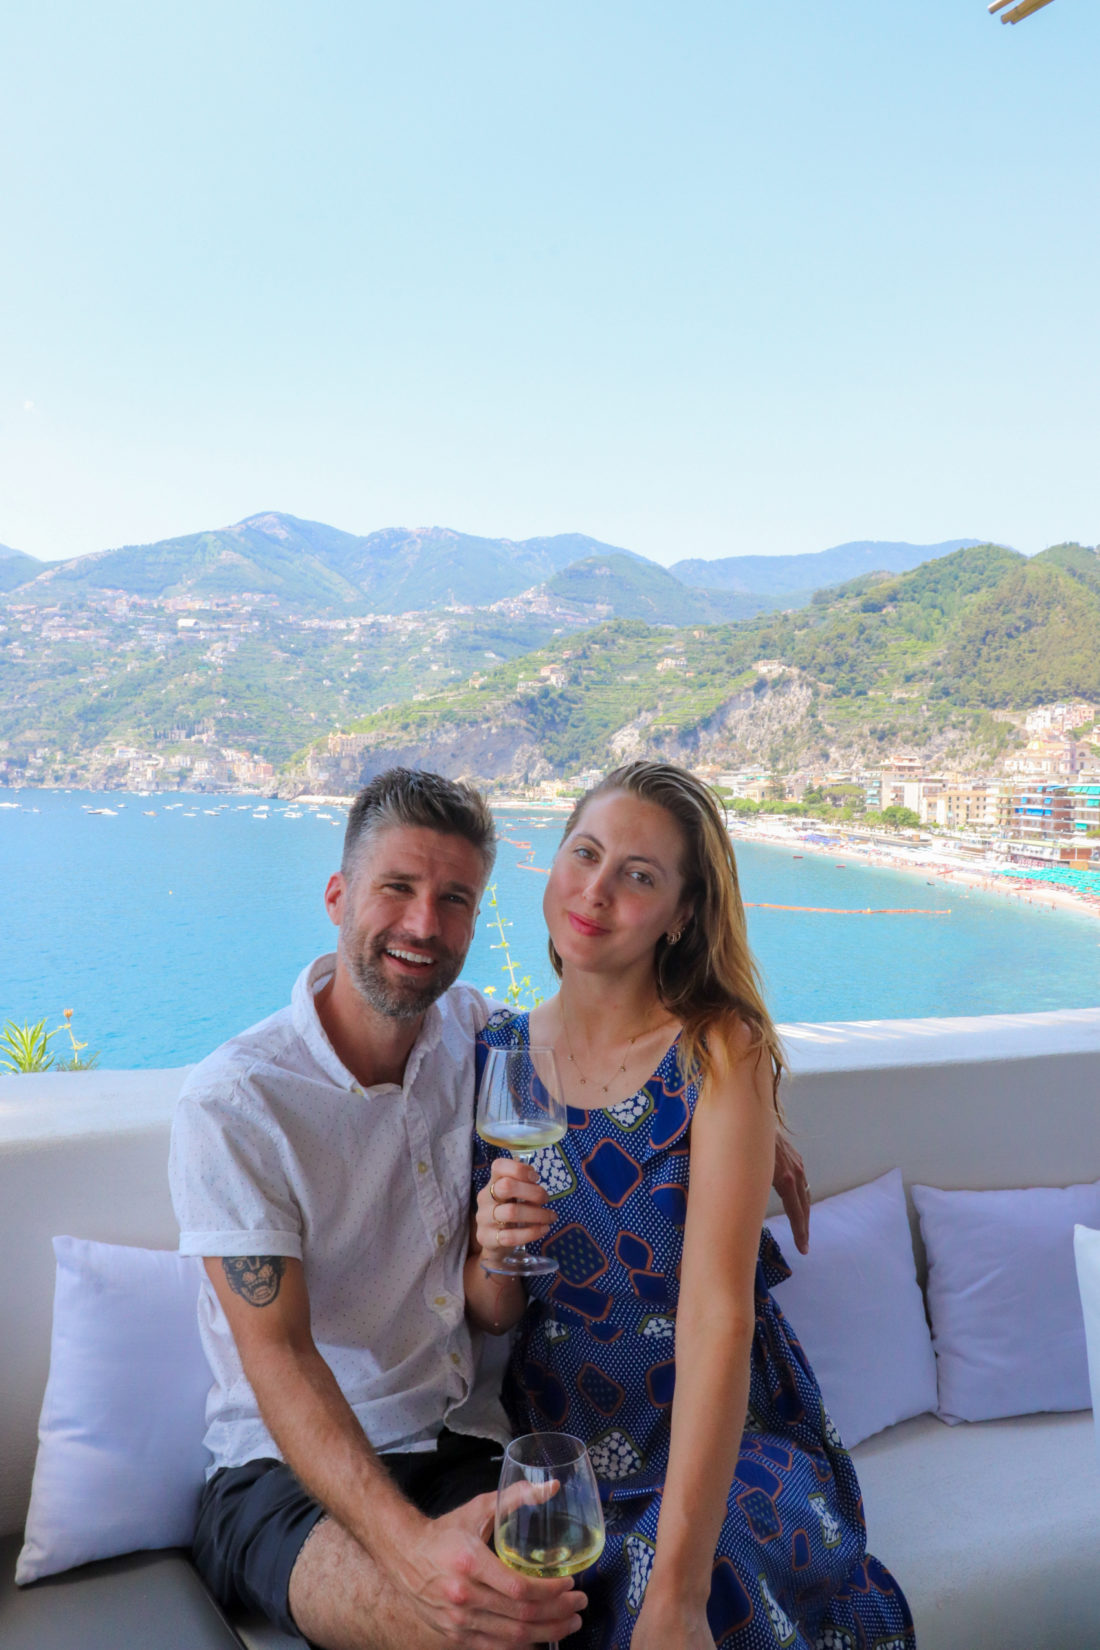 Eva Amurri Martino and husband Kyle in Italy